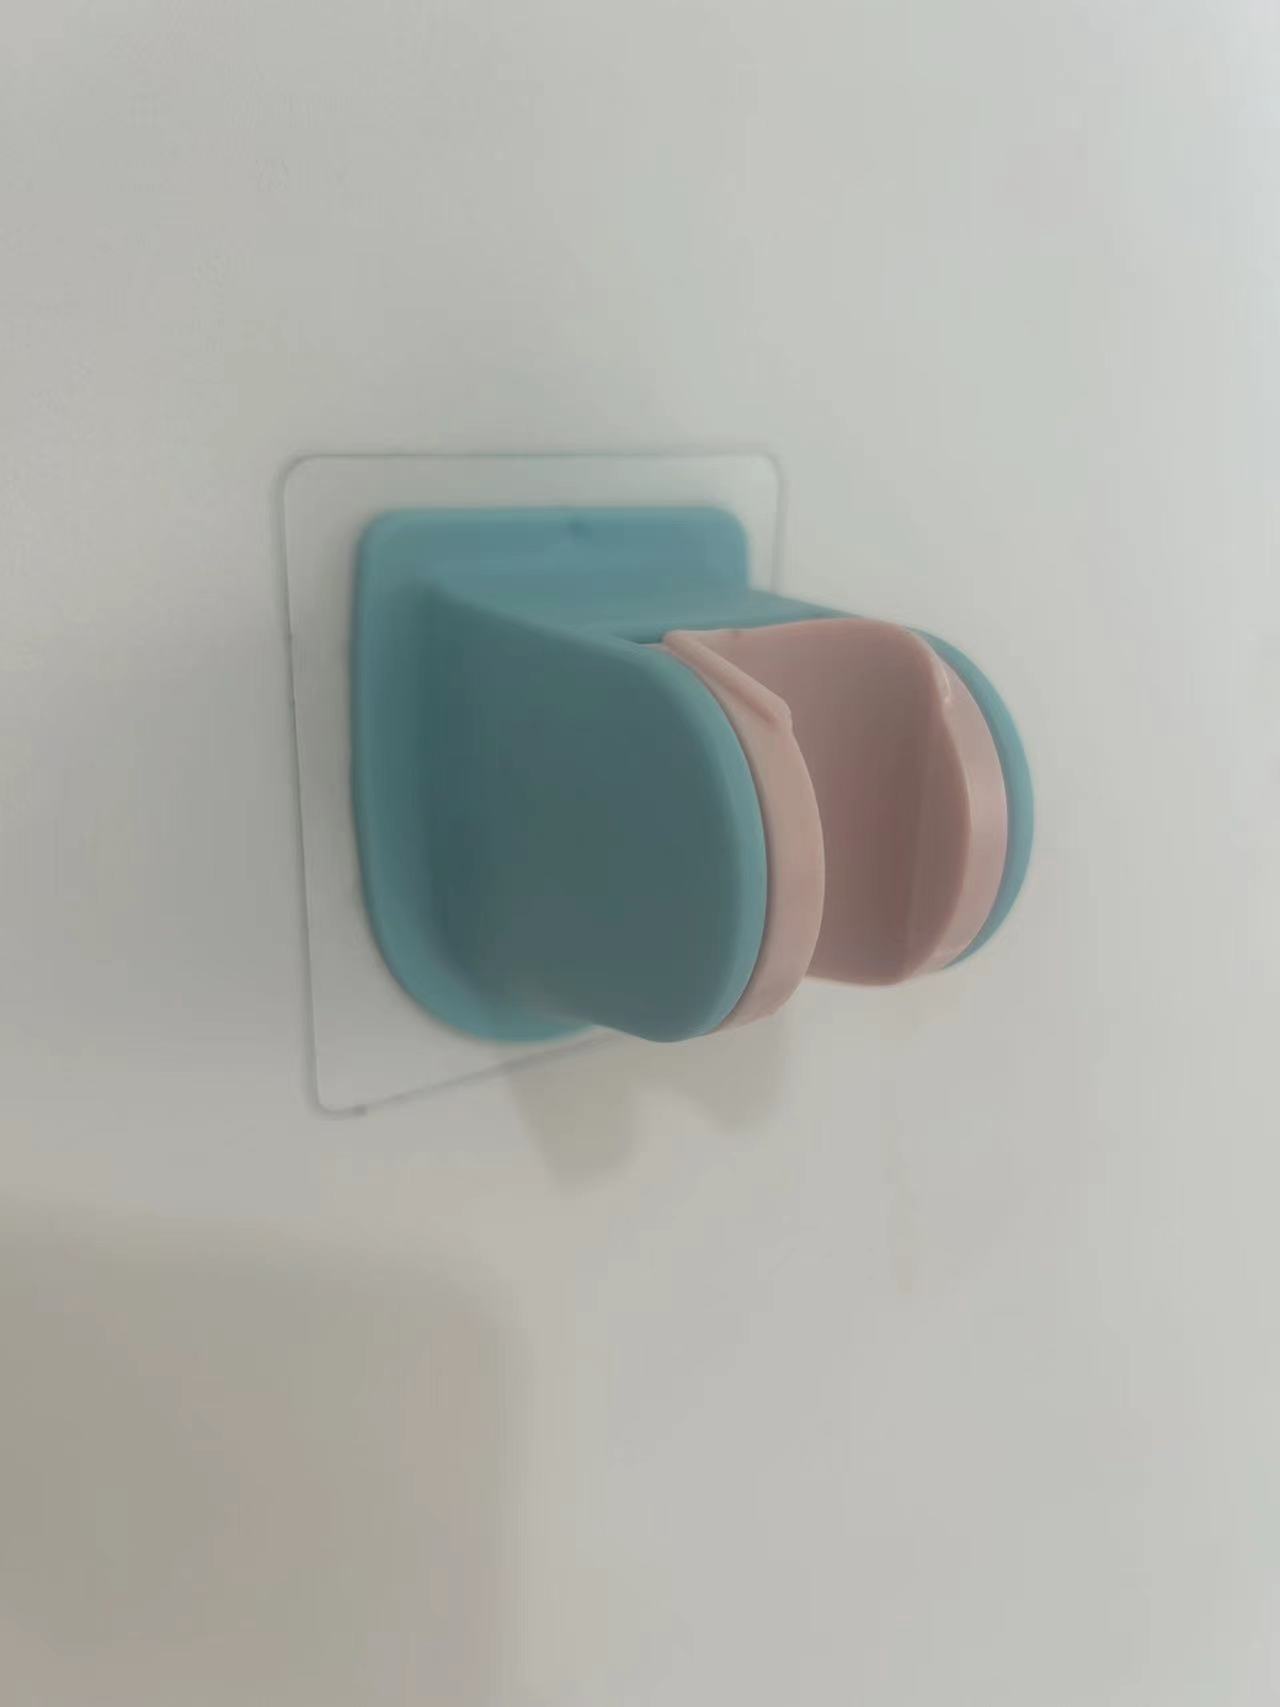 Punch-Free Shower Bracket Fixed Seat Universal Adjustable Lotus Seedpod Sticky Hook Bathroom Toilet Nozzle Universal Base